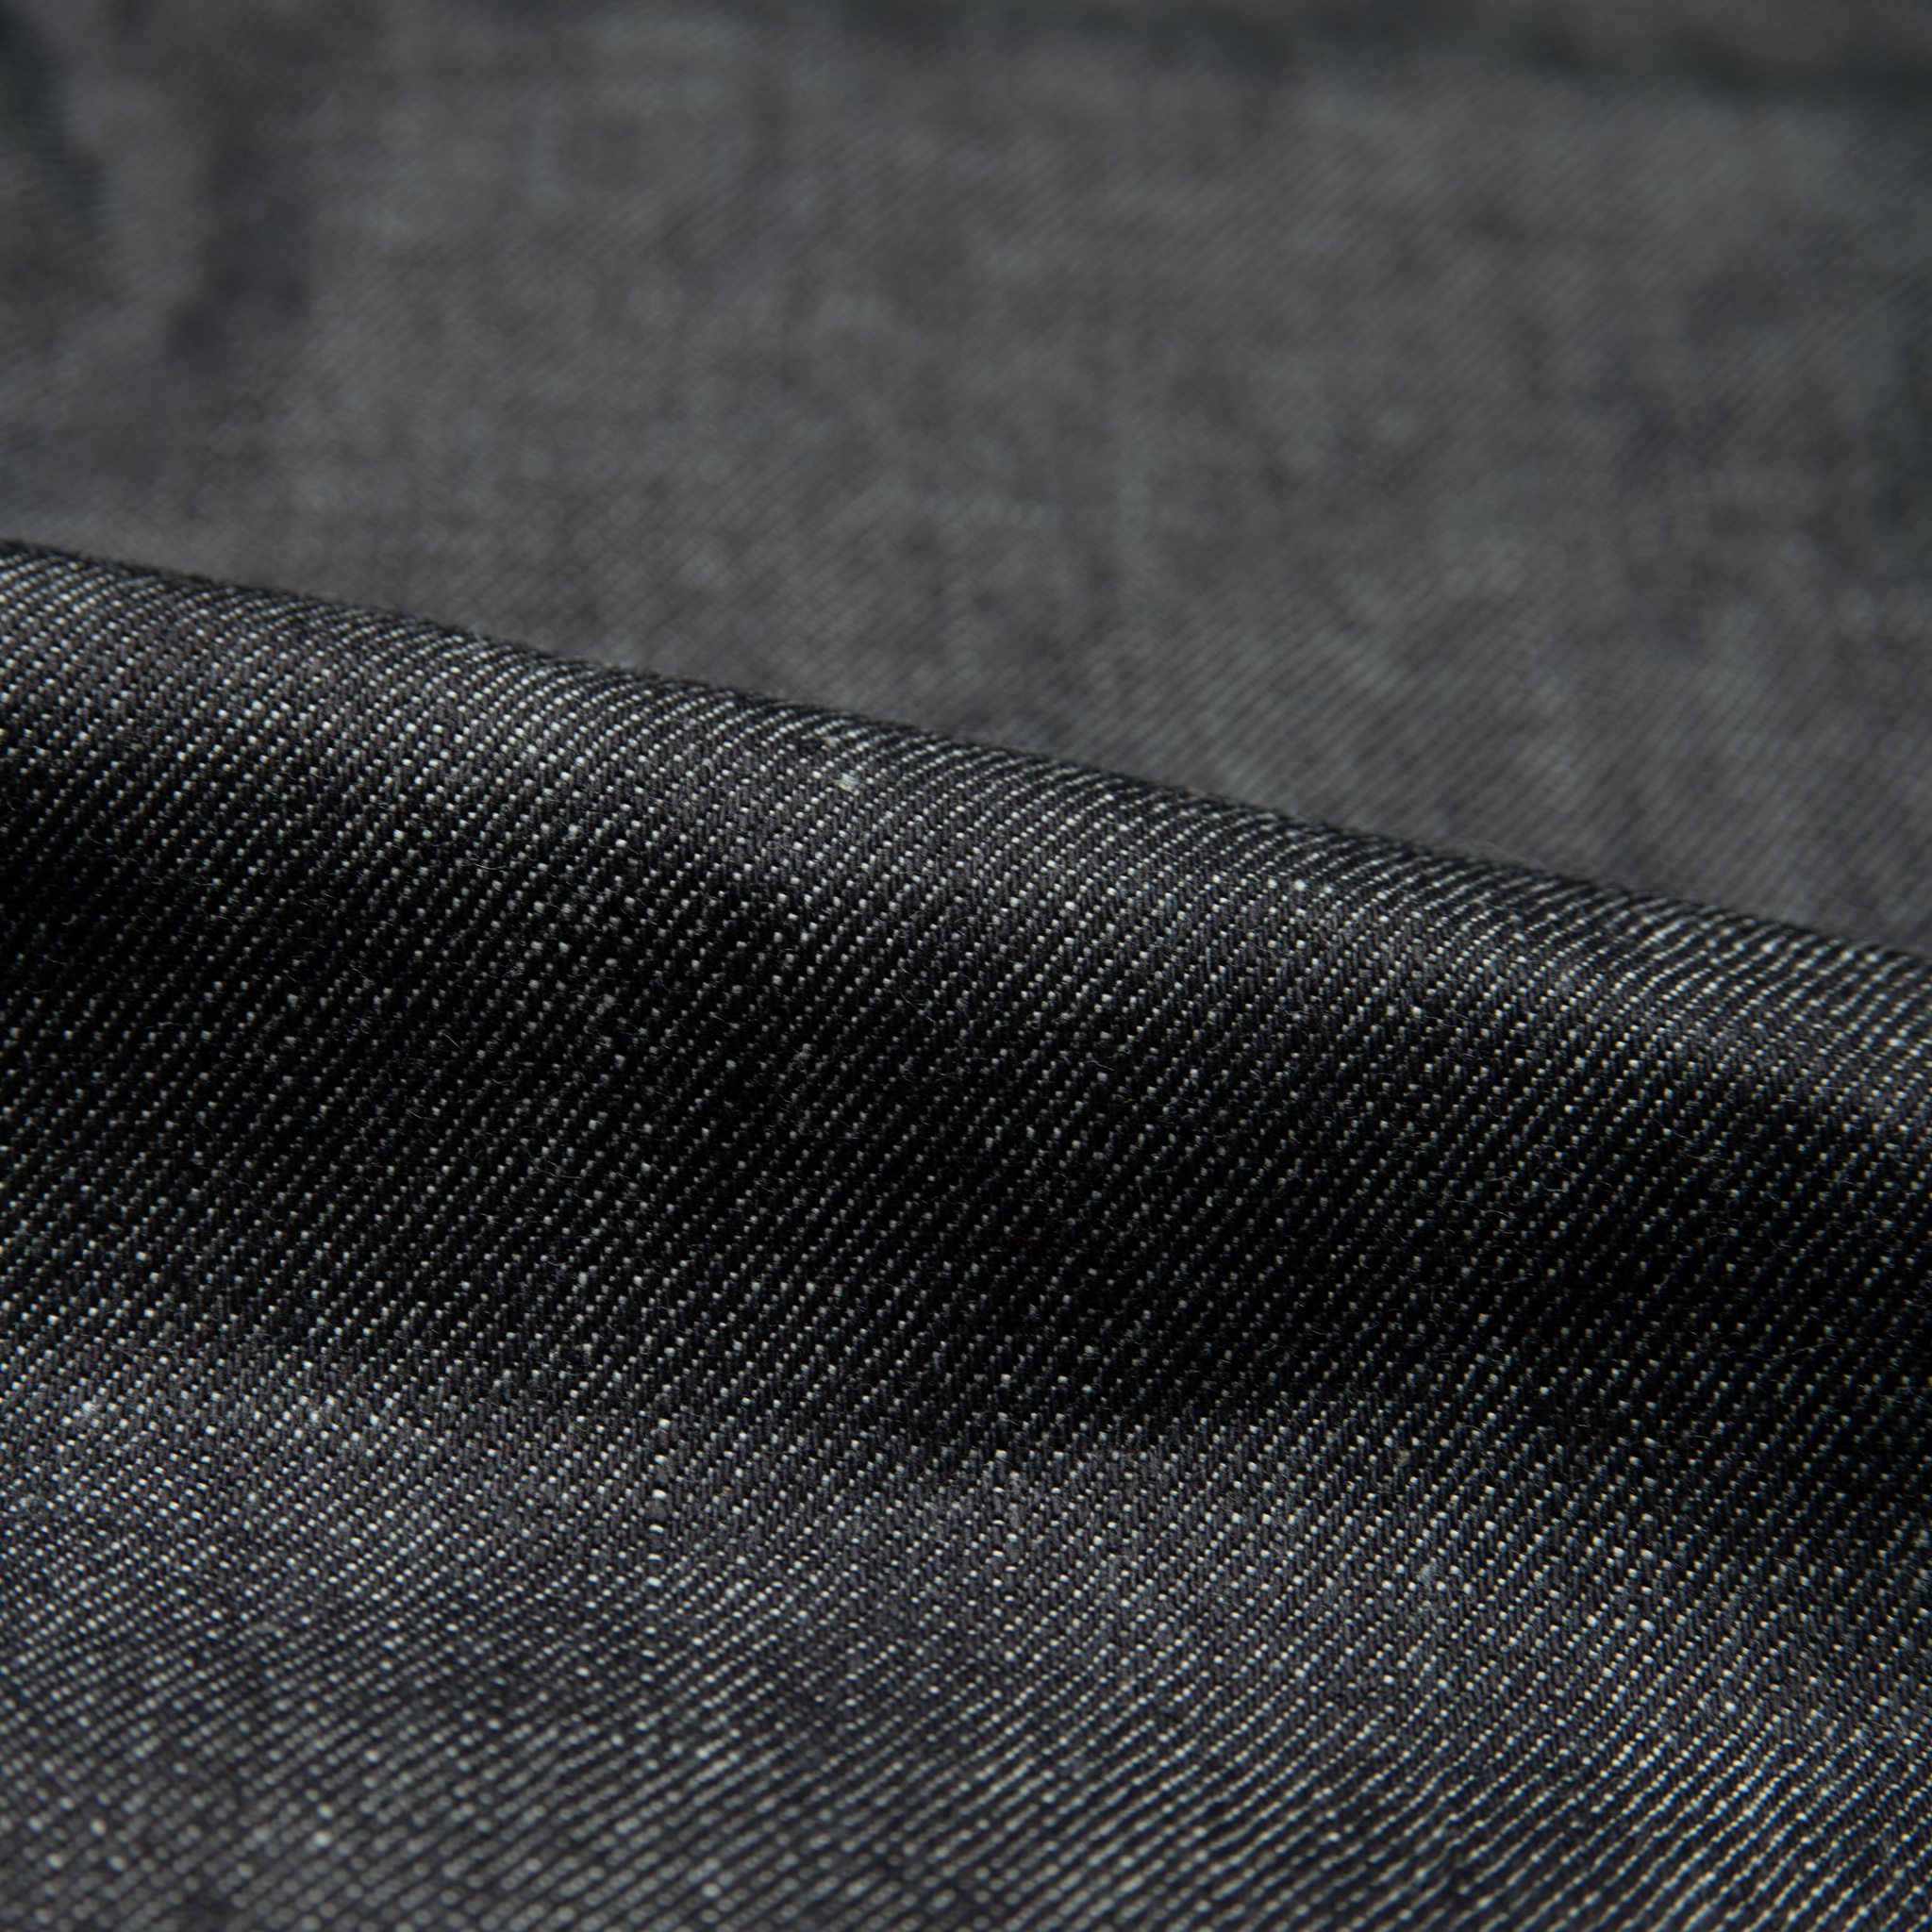  Scratch-n-Sniff - Hiba Cypress  jeans - fabric 